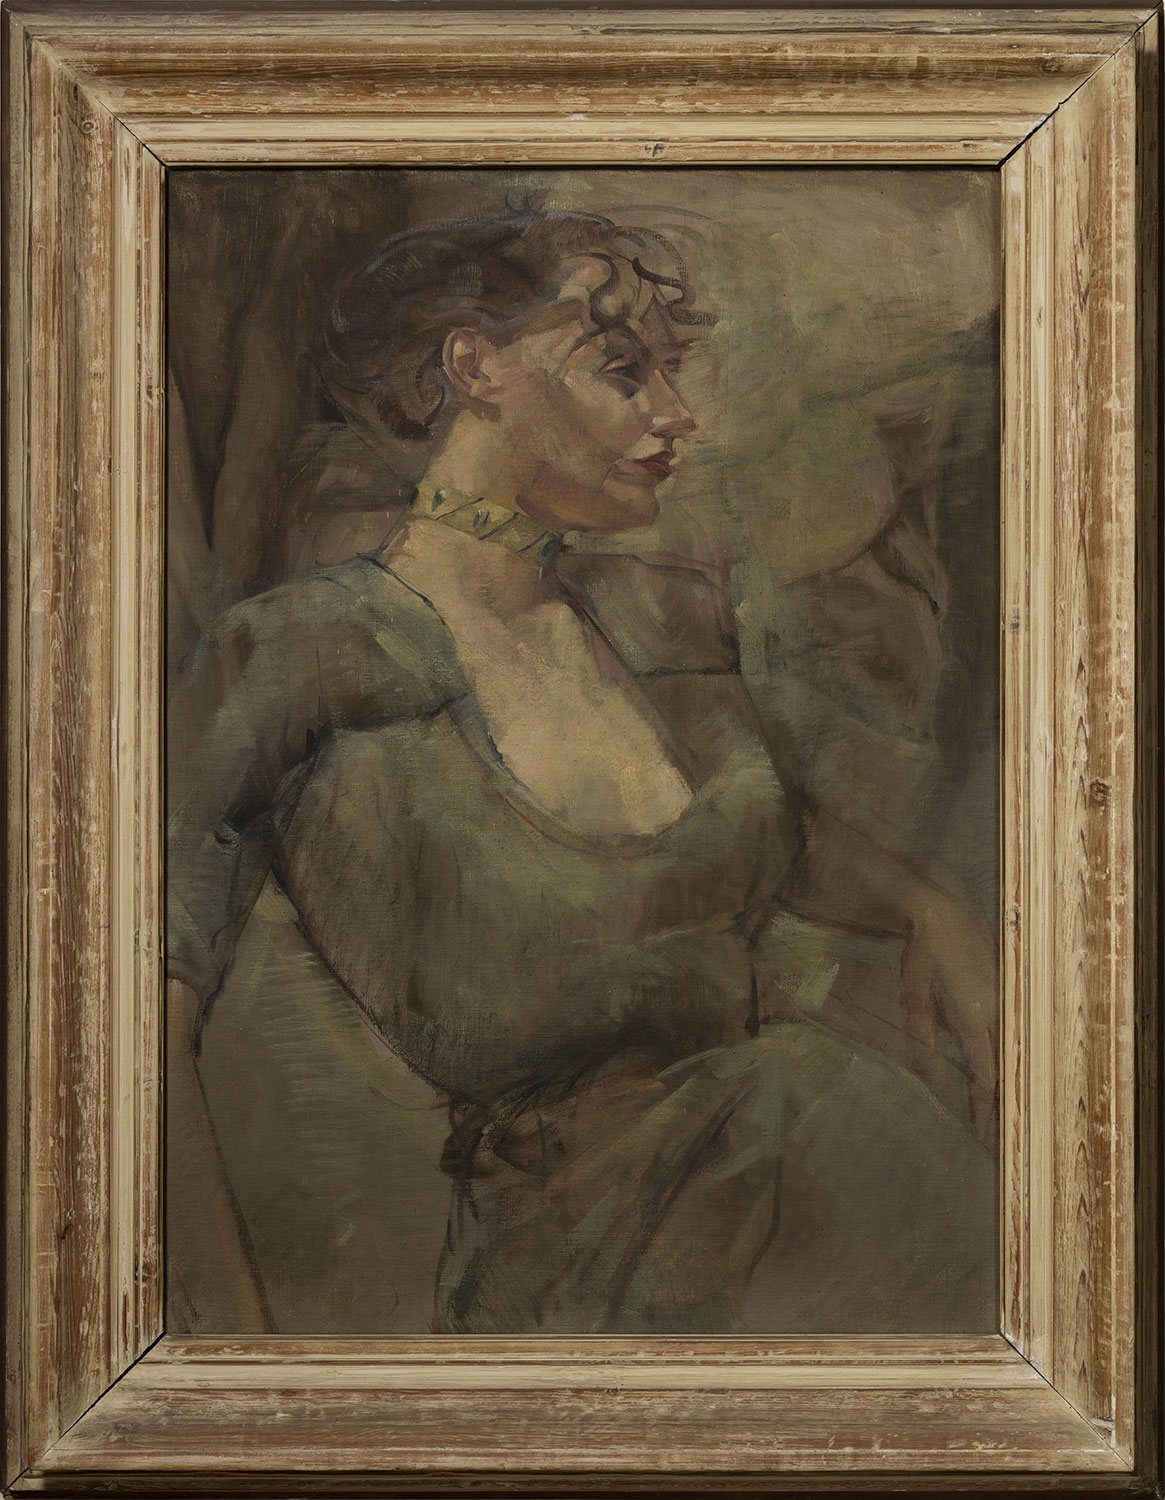 Portrait de Madeleine Dubois. ©KIK-IRPA, Bruxelles